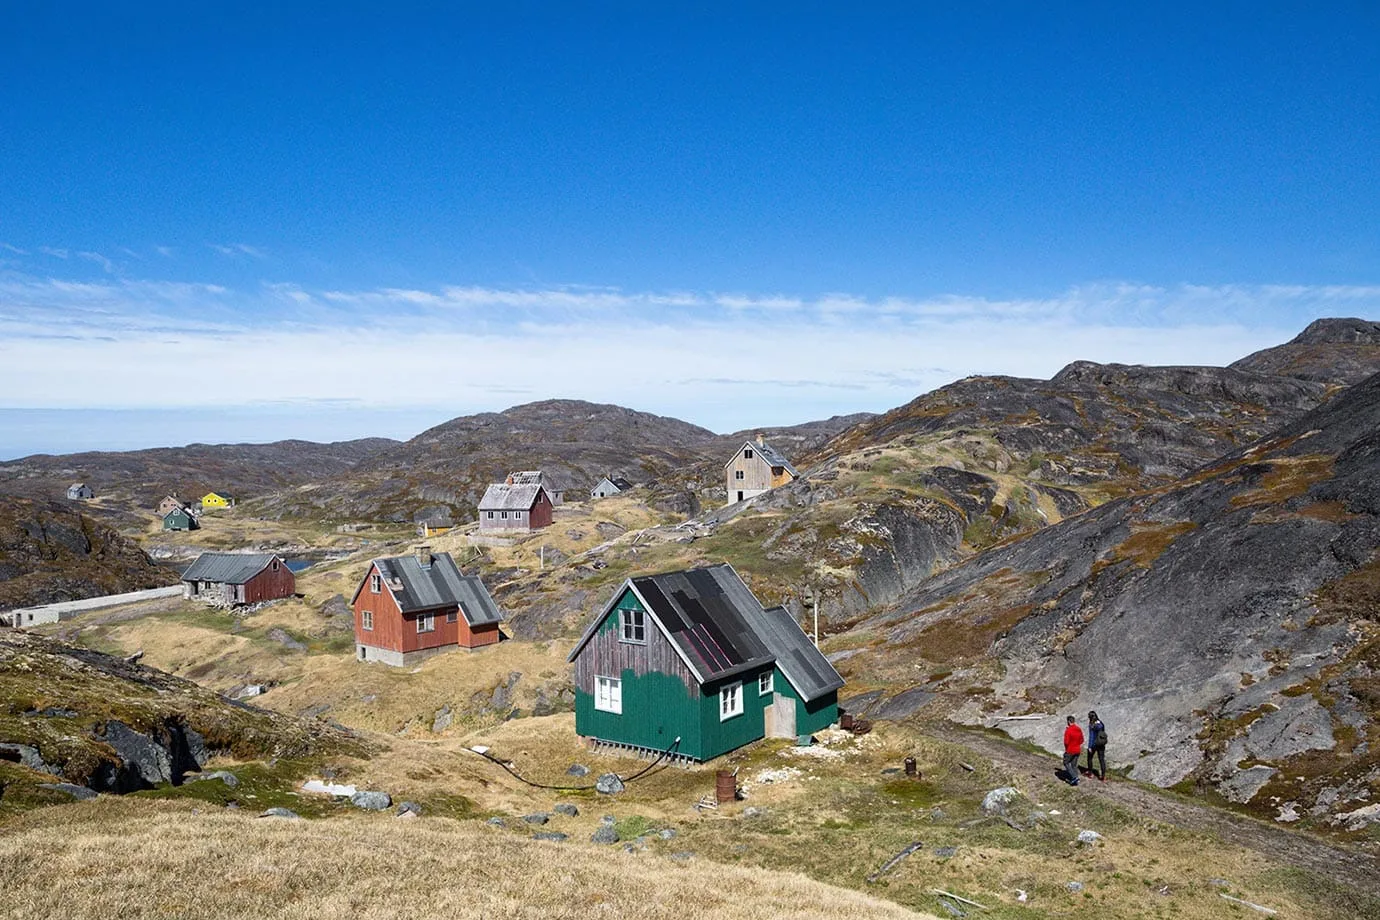 Kangeq outside of Nuuk Greenland, abandoned village